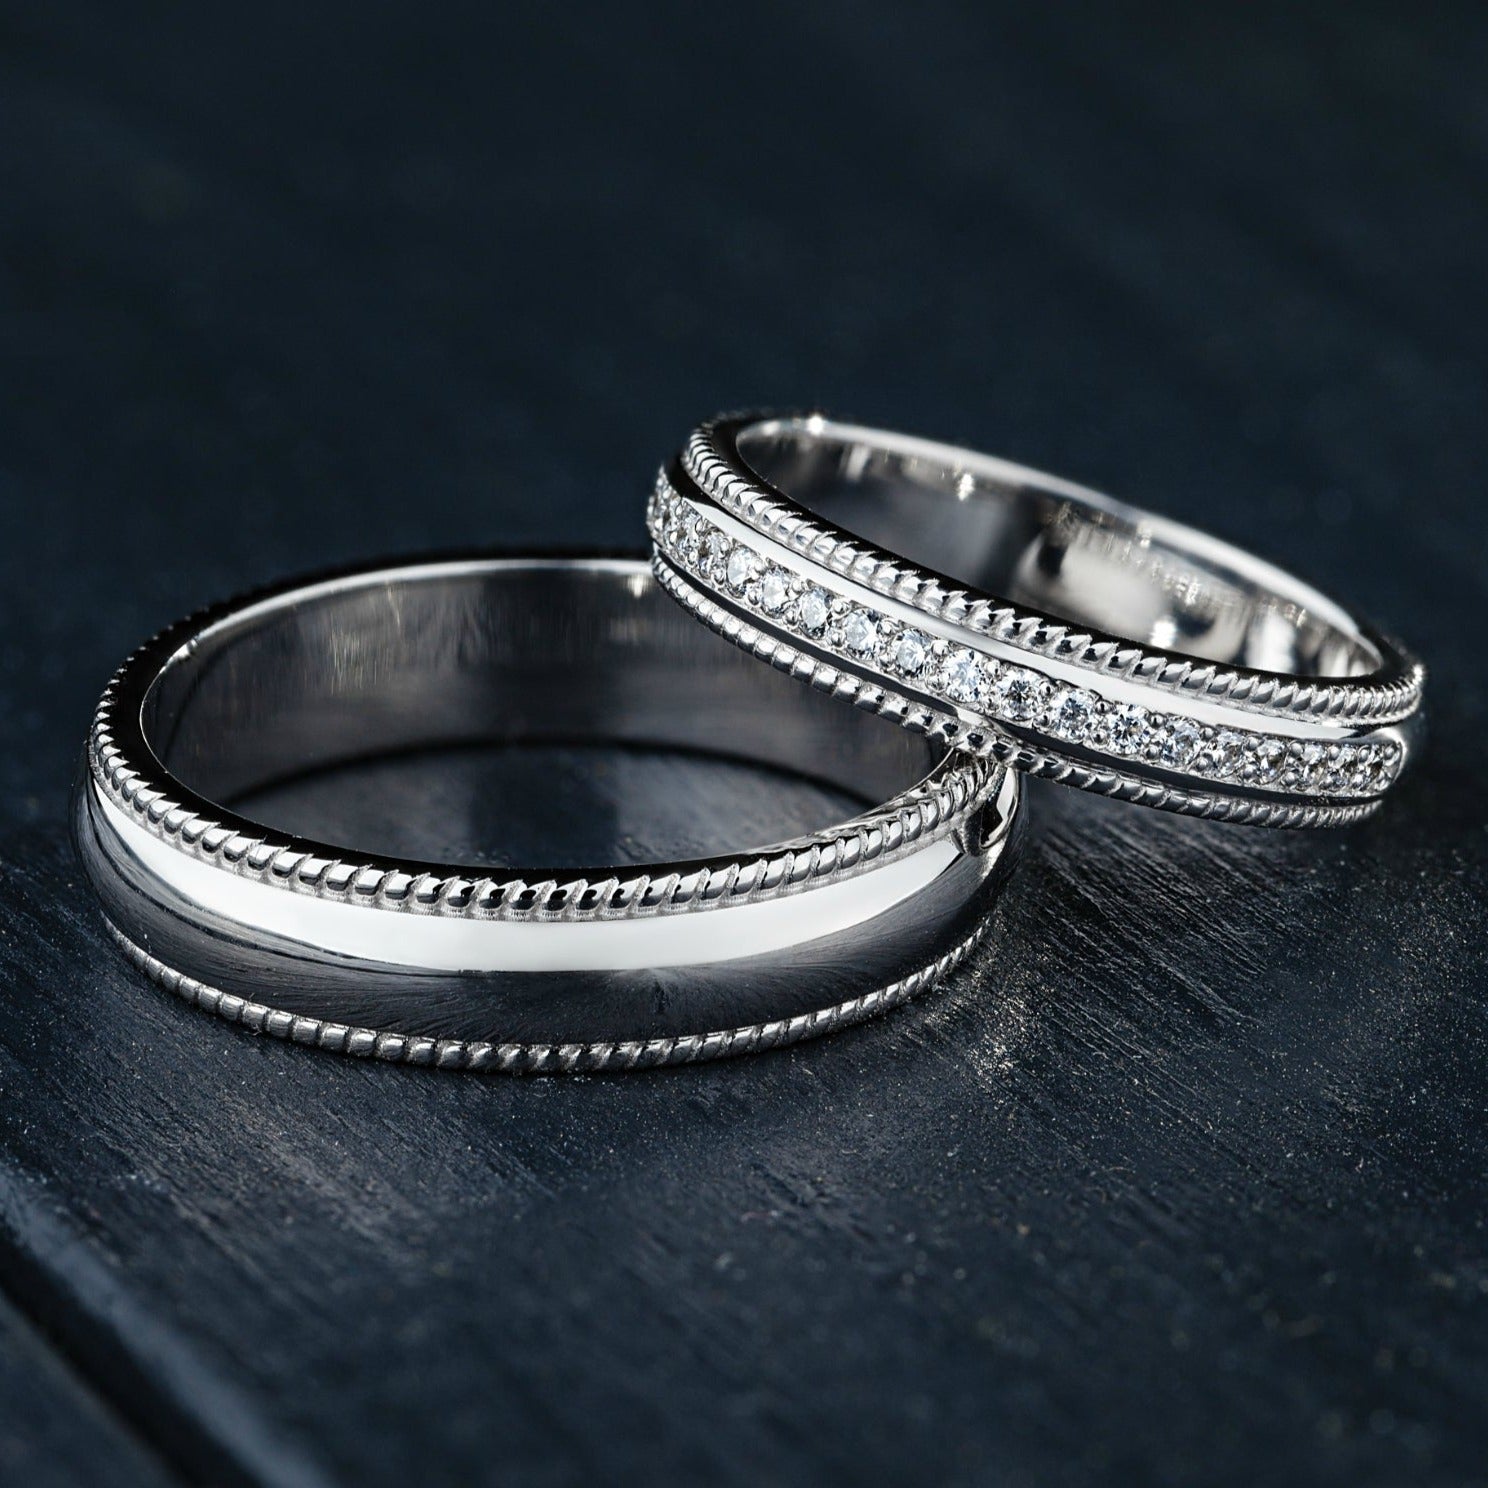 Gold wedding rings set with milgrain details. Unique wedding bands. Gold wedding rings with diamonds. Couple wedding rings